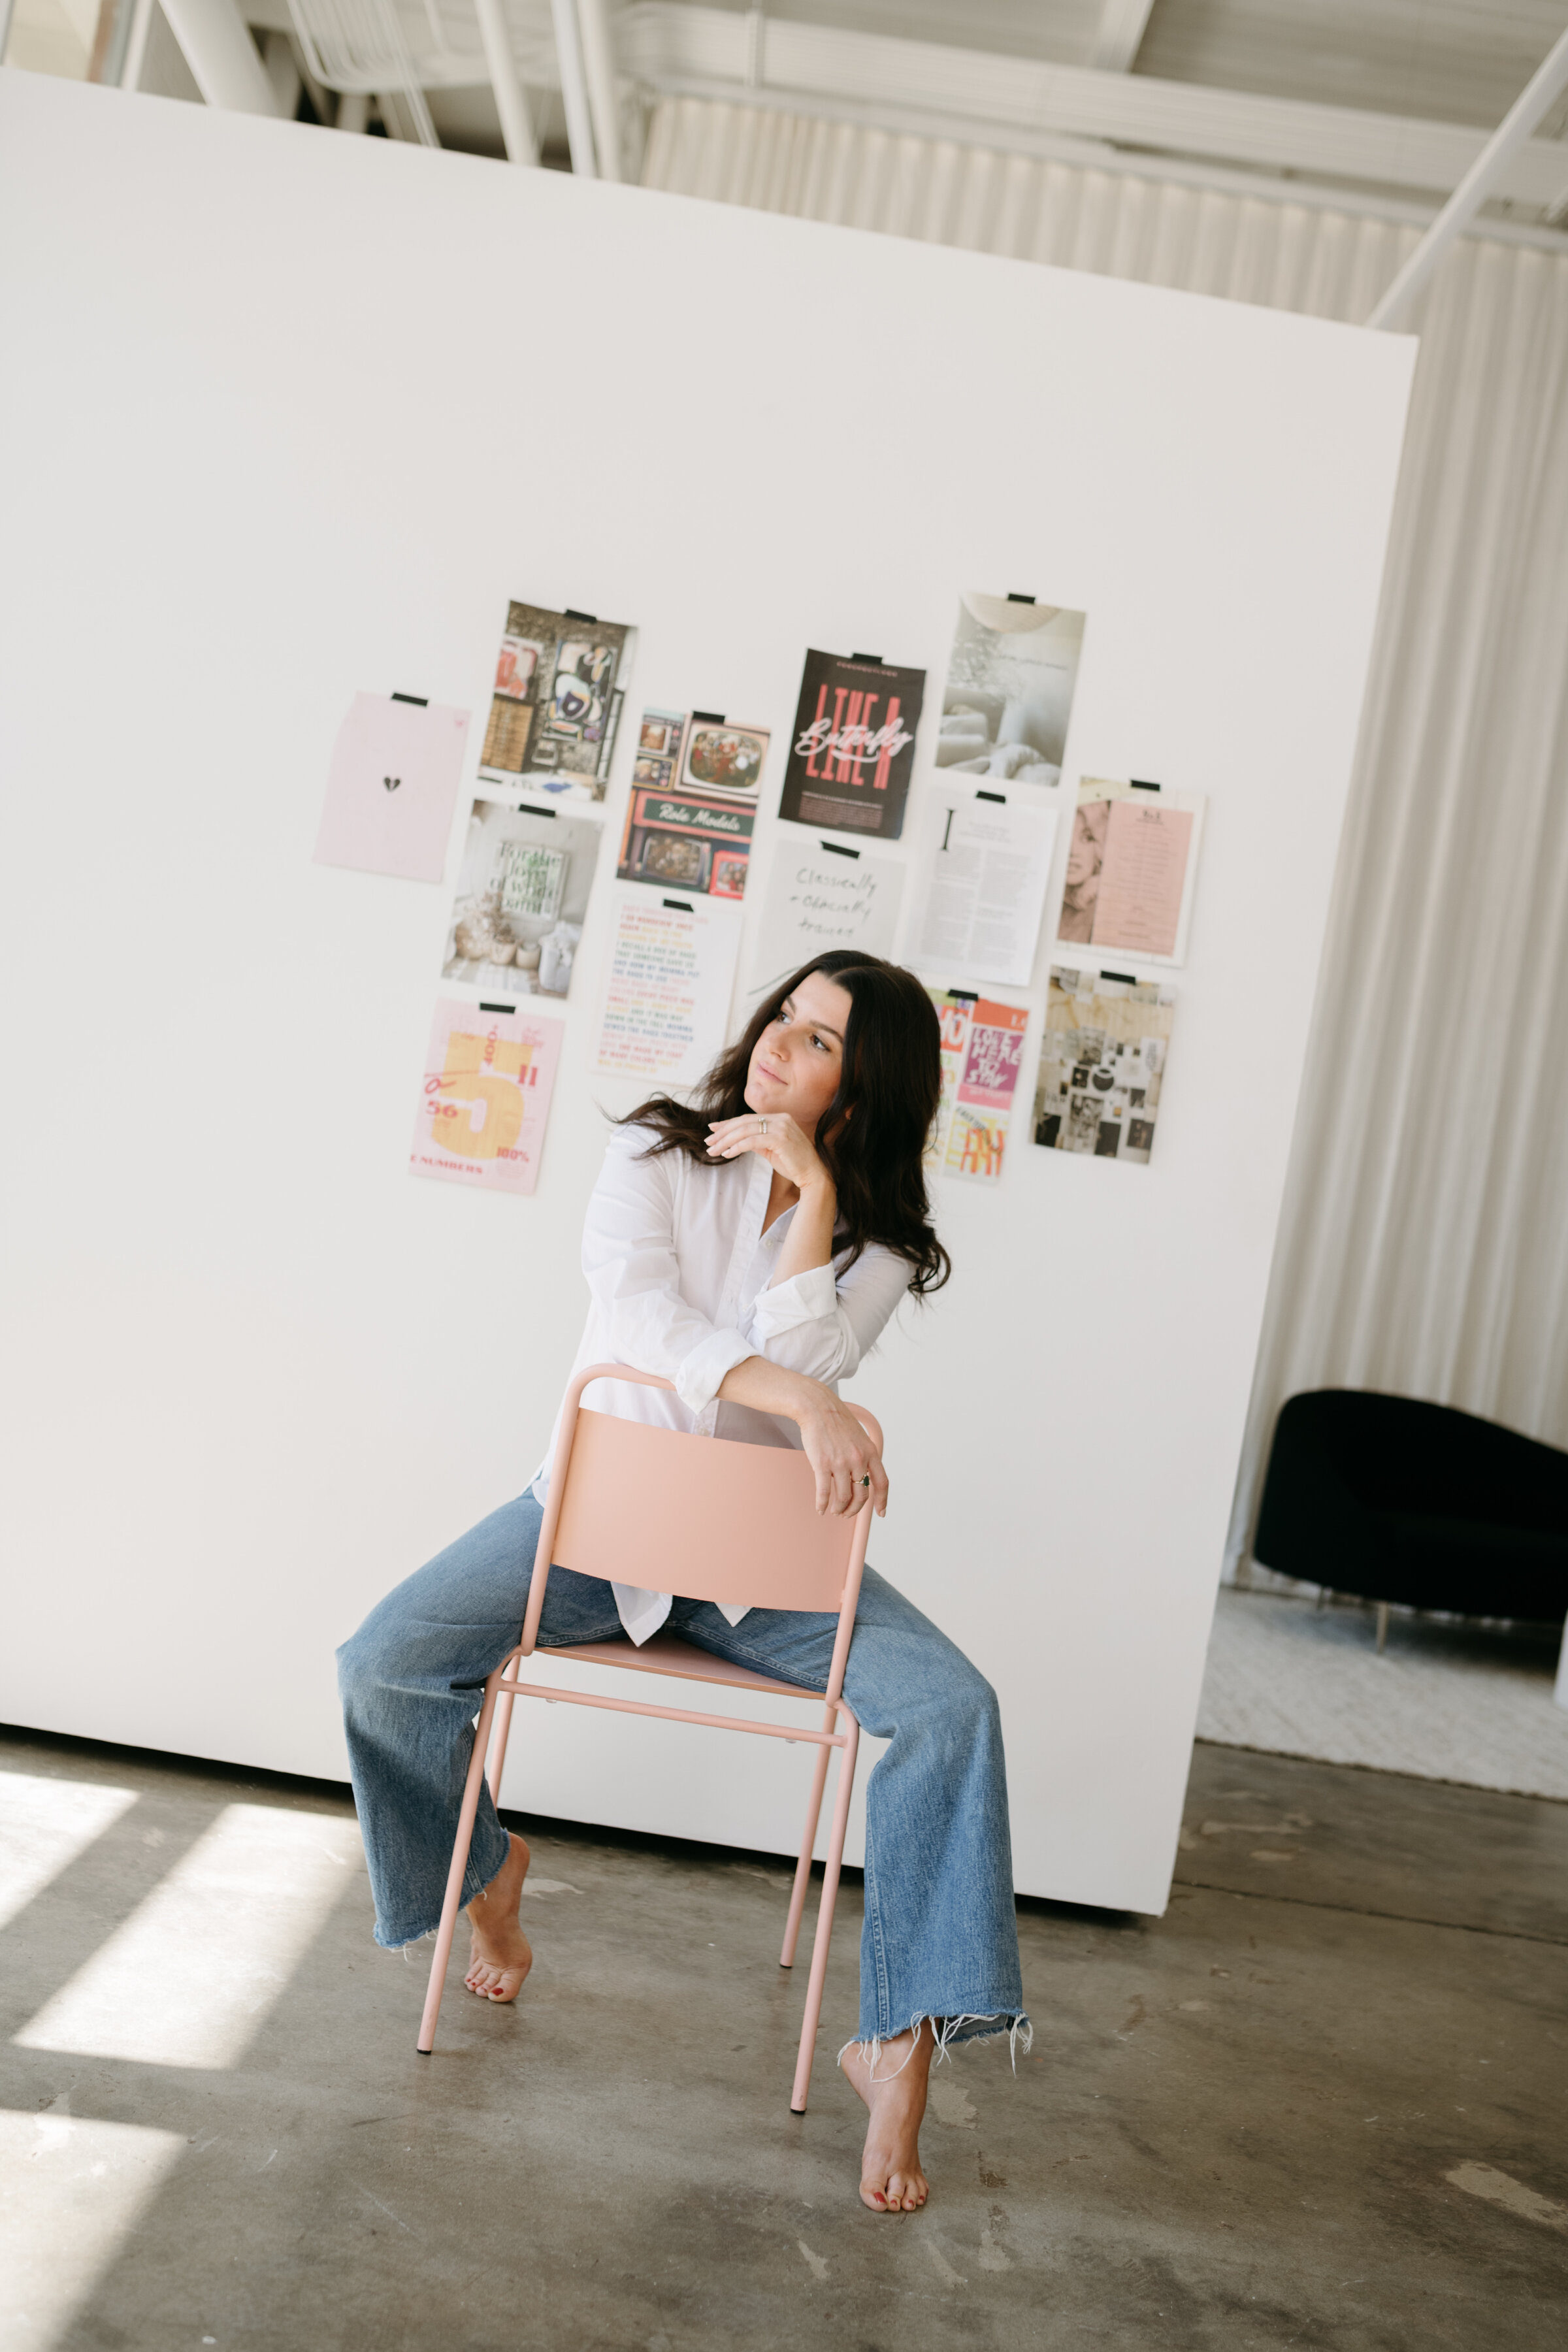 web designer sitting in front of mood board in a minimalist studio